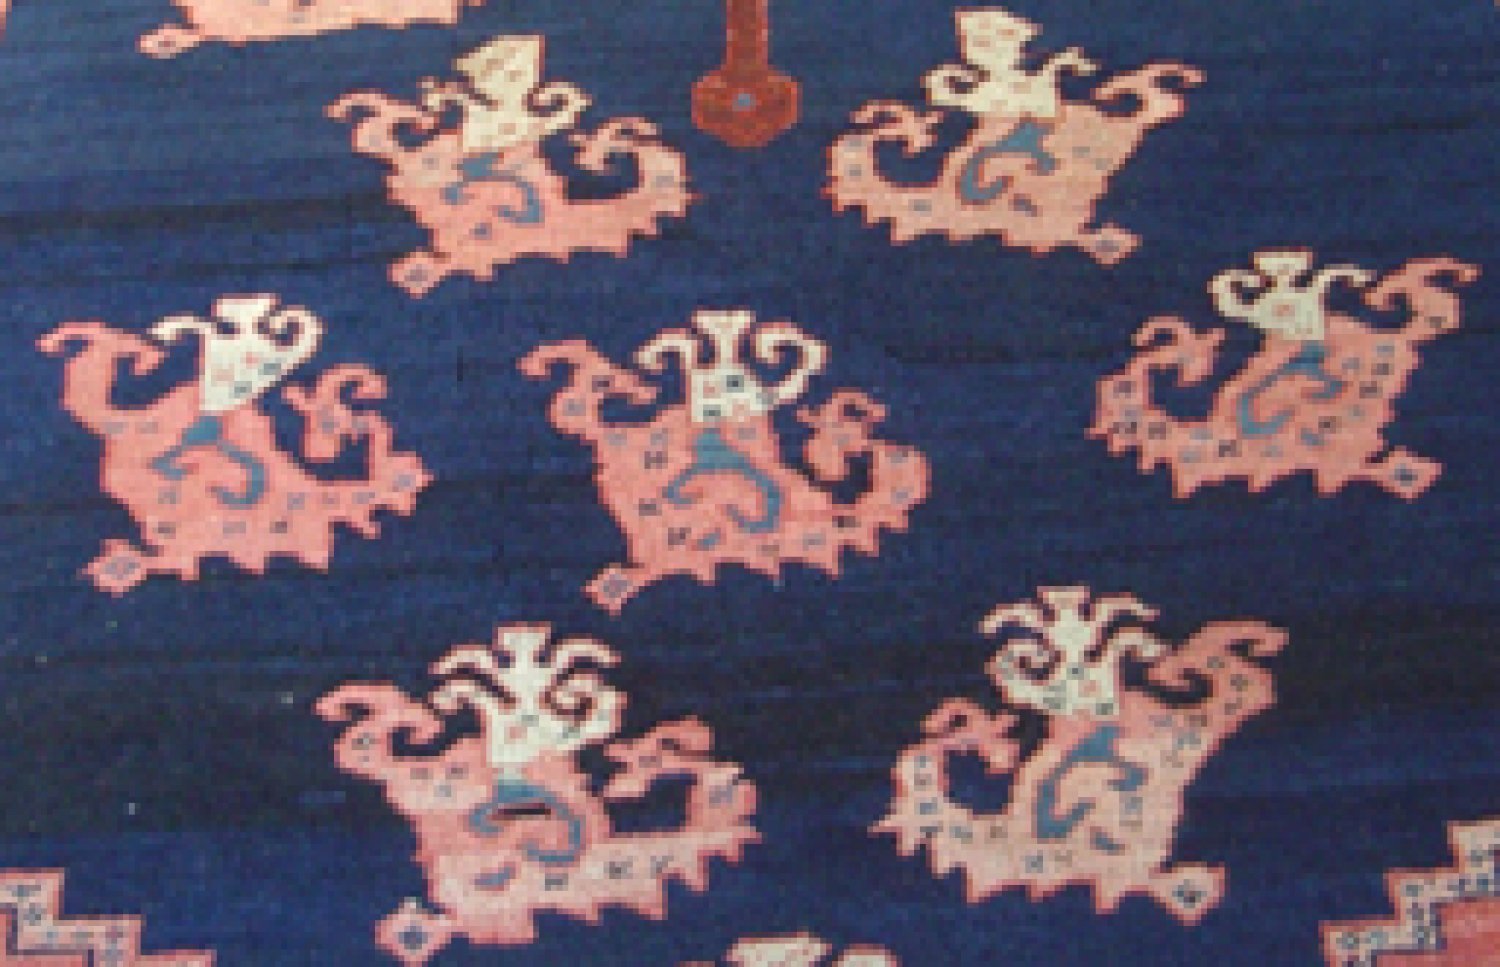 Bakshaish carpet from northern Persia